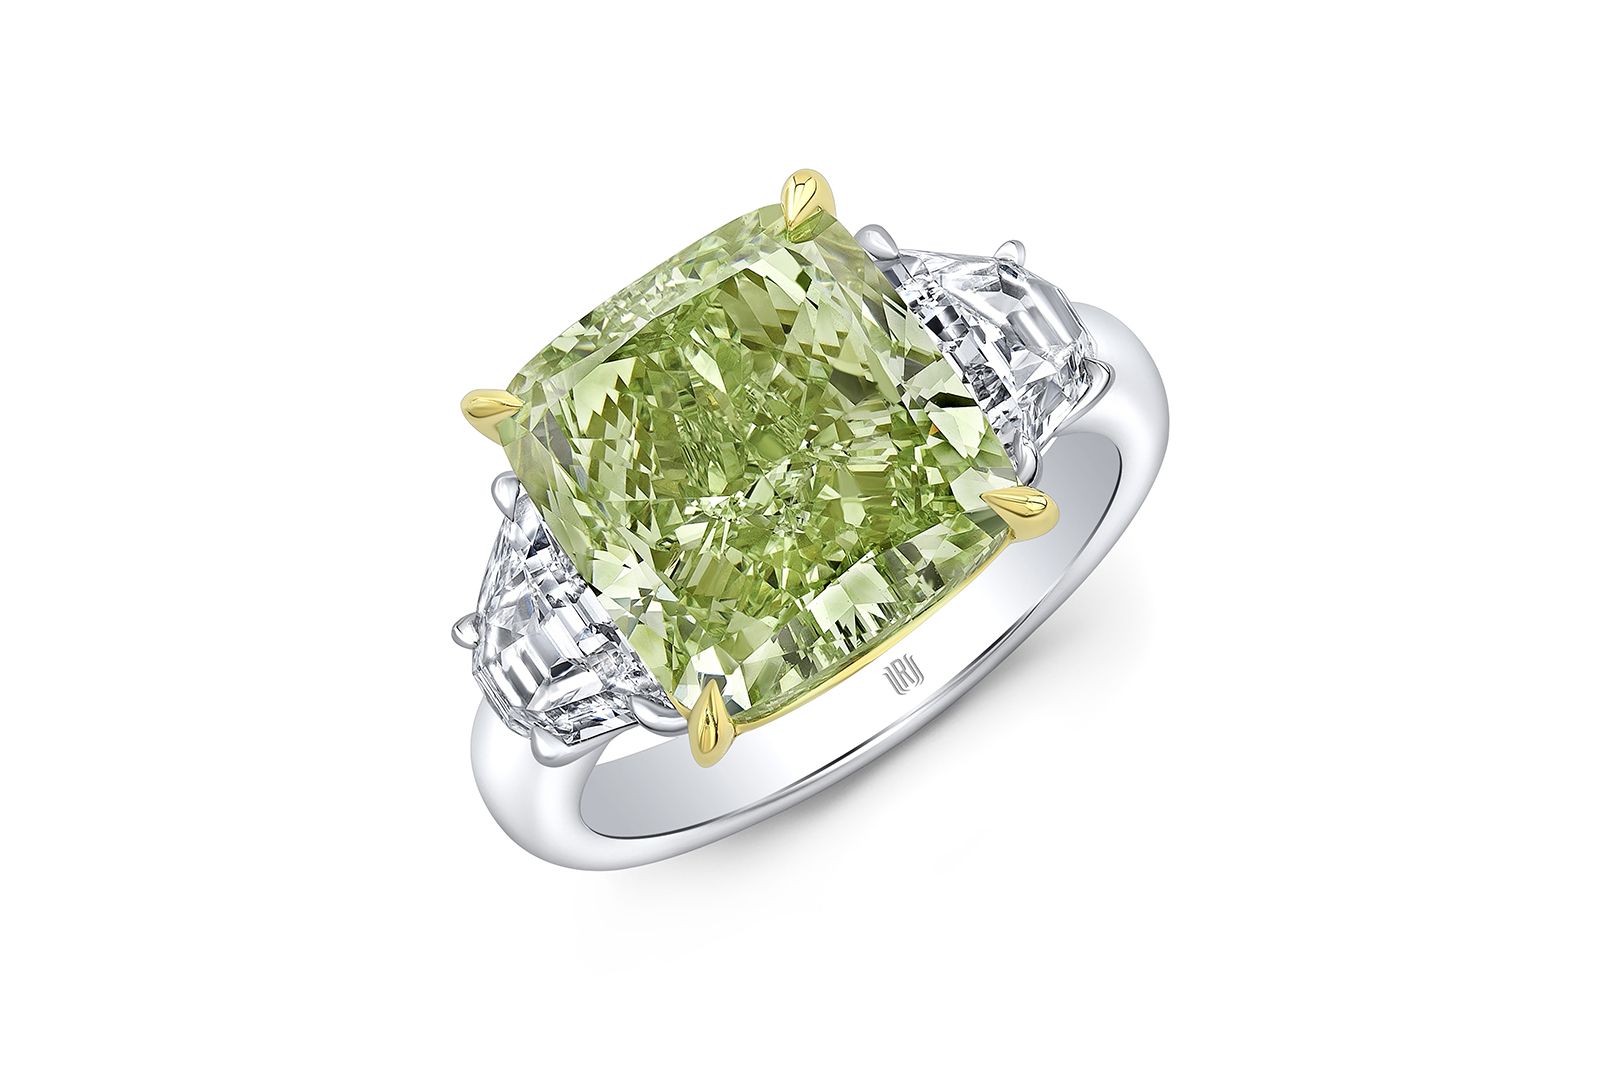 Rahaminov Diamonds green diamond ring that Ben Affleck proposed to Jennifer Lopez with